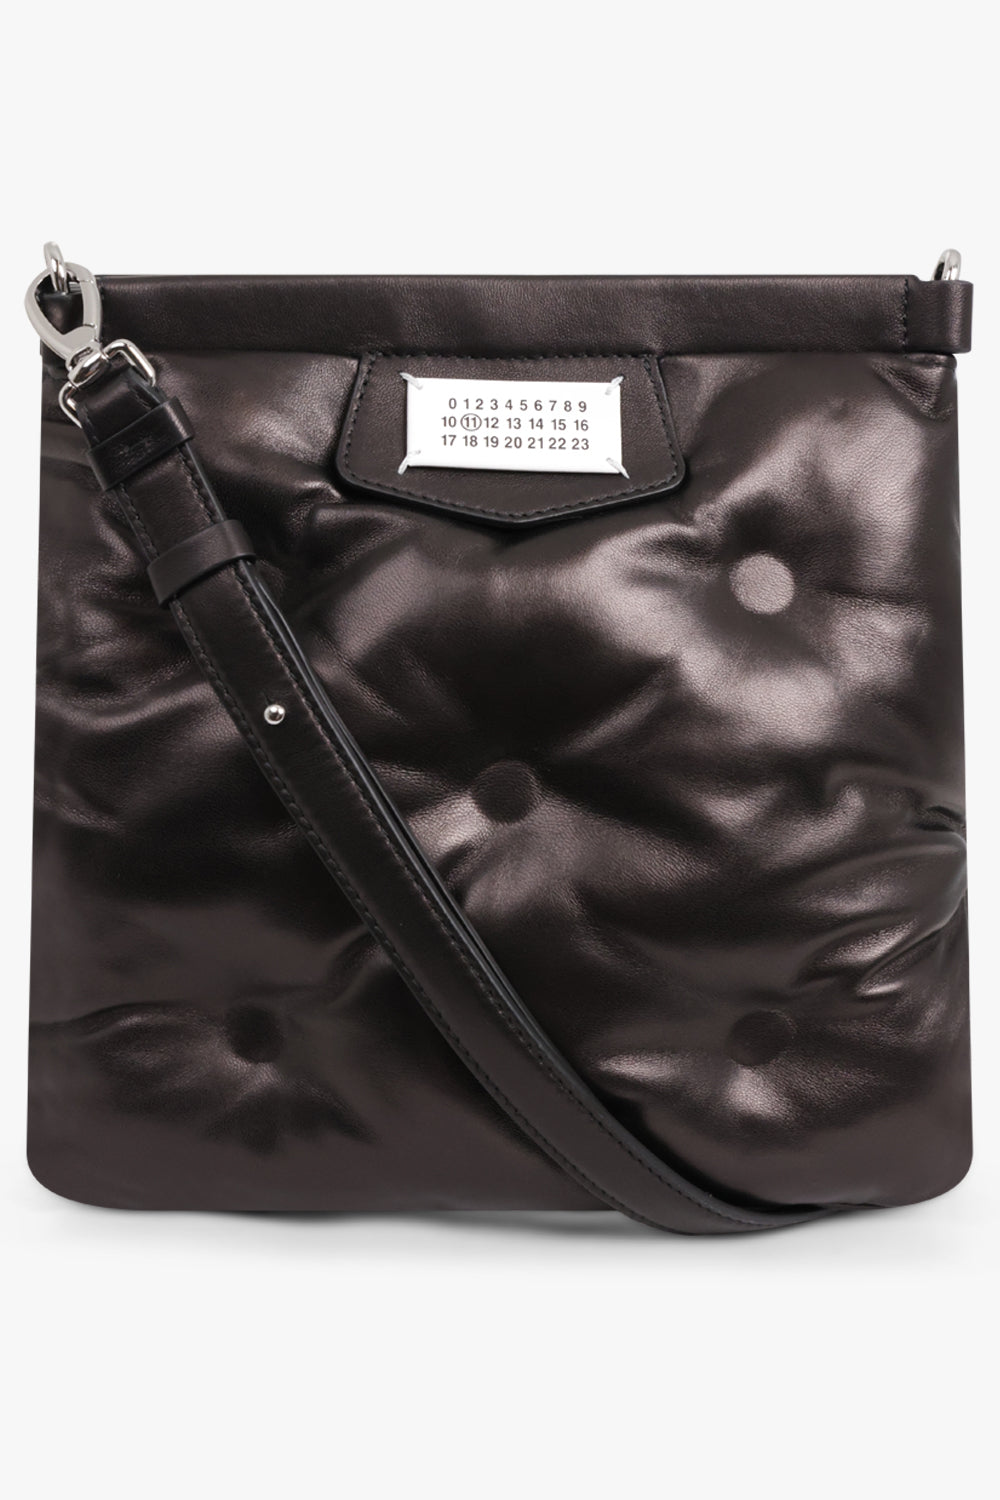 Designer Crossbody Handbag In Black, Grey, Cream, And Pink Soft Leather  Mini Tabby Pillow Purse For Women 26cm Hobo Purses In Pink, Green, Or Black  From Designer_bag990, $56.3 | DHgate.Com